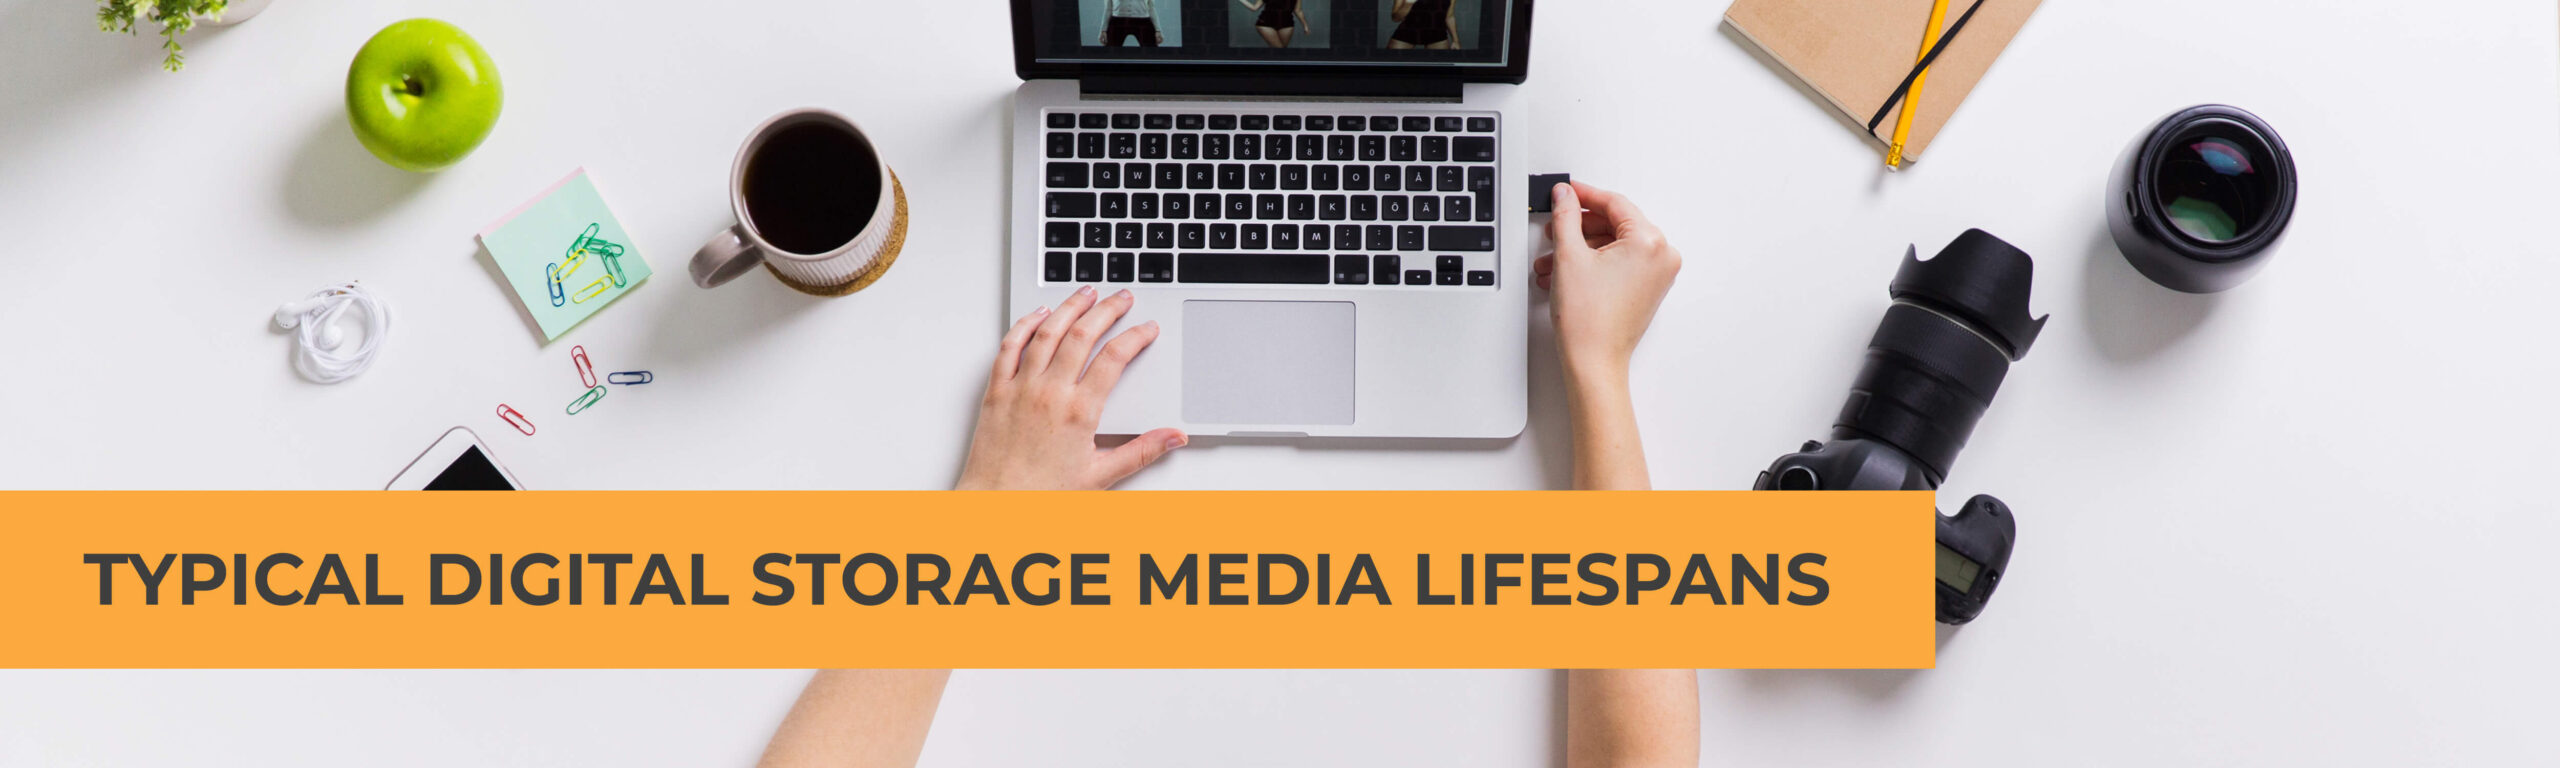 Typical Digital Storage Media Lifespans